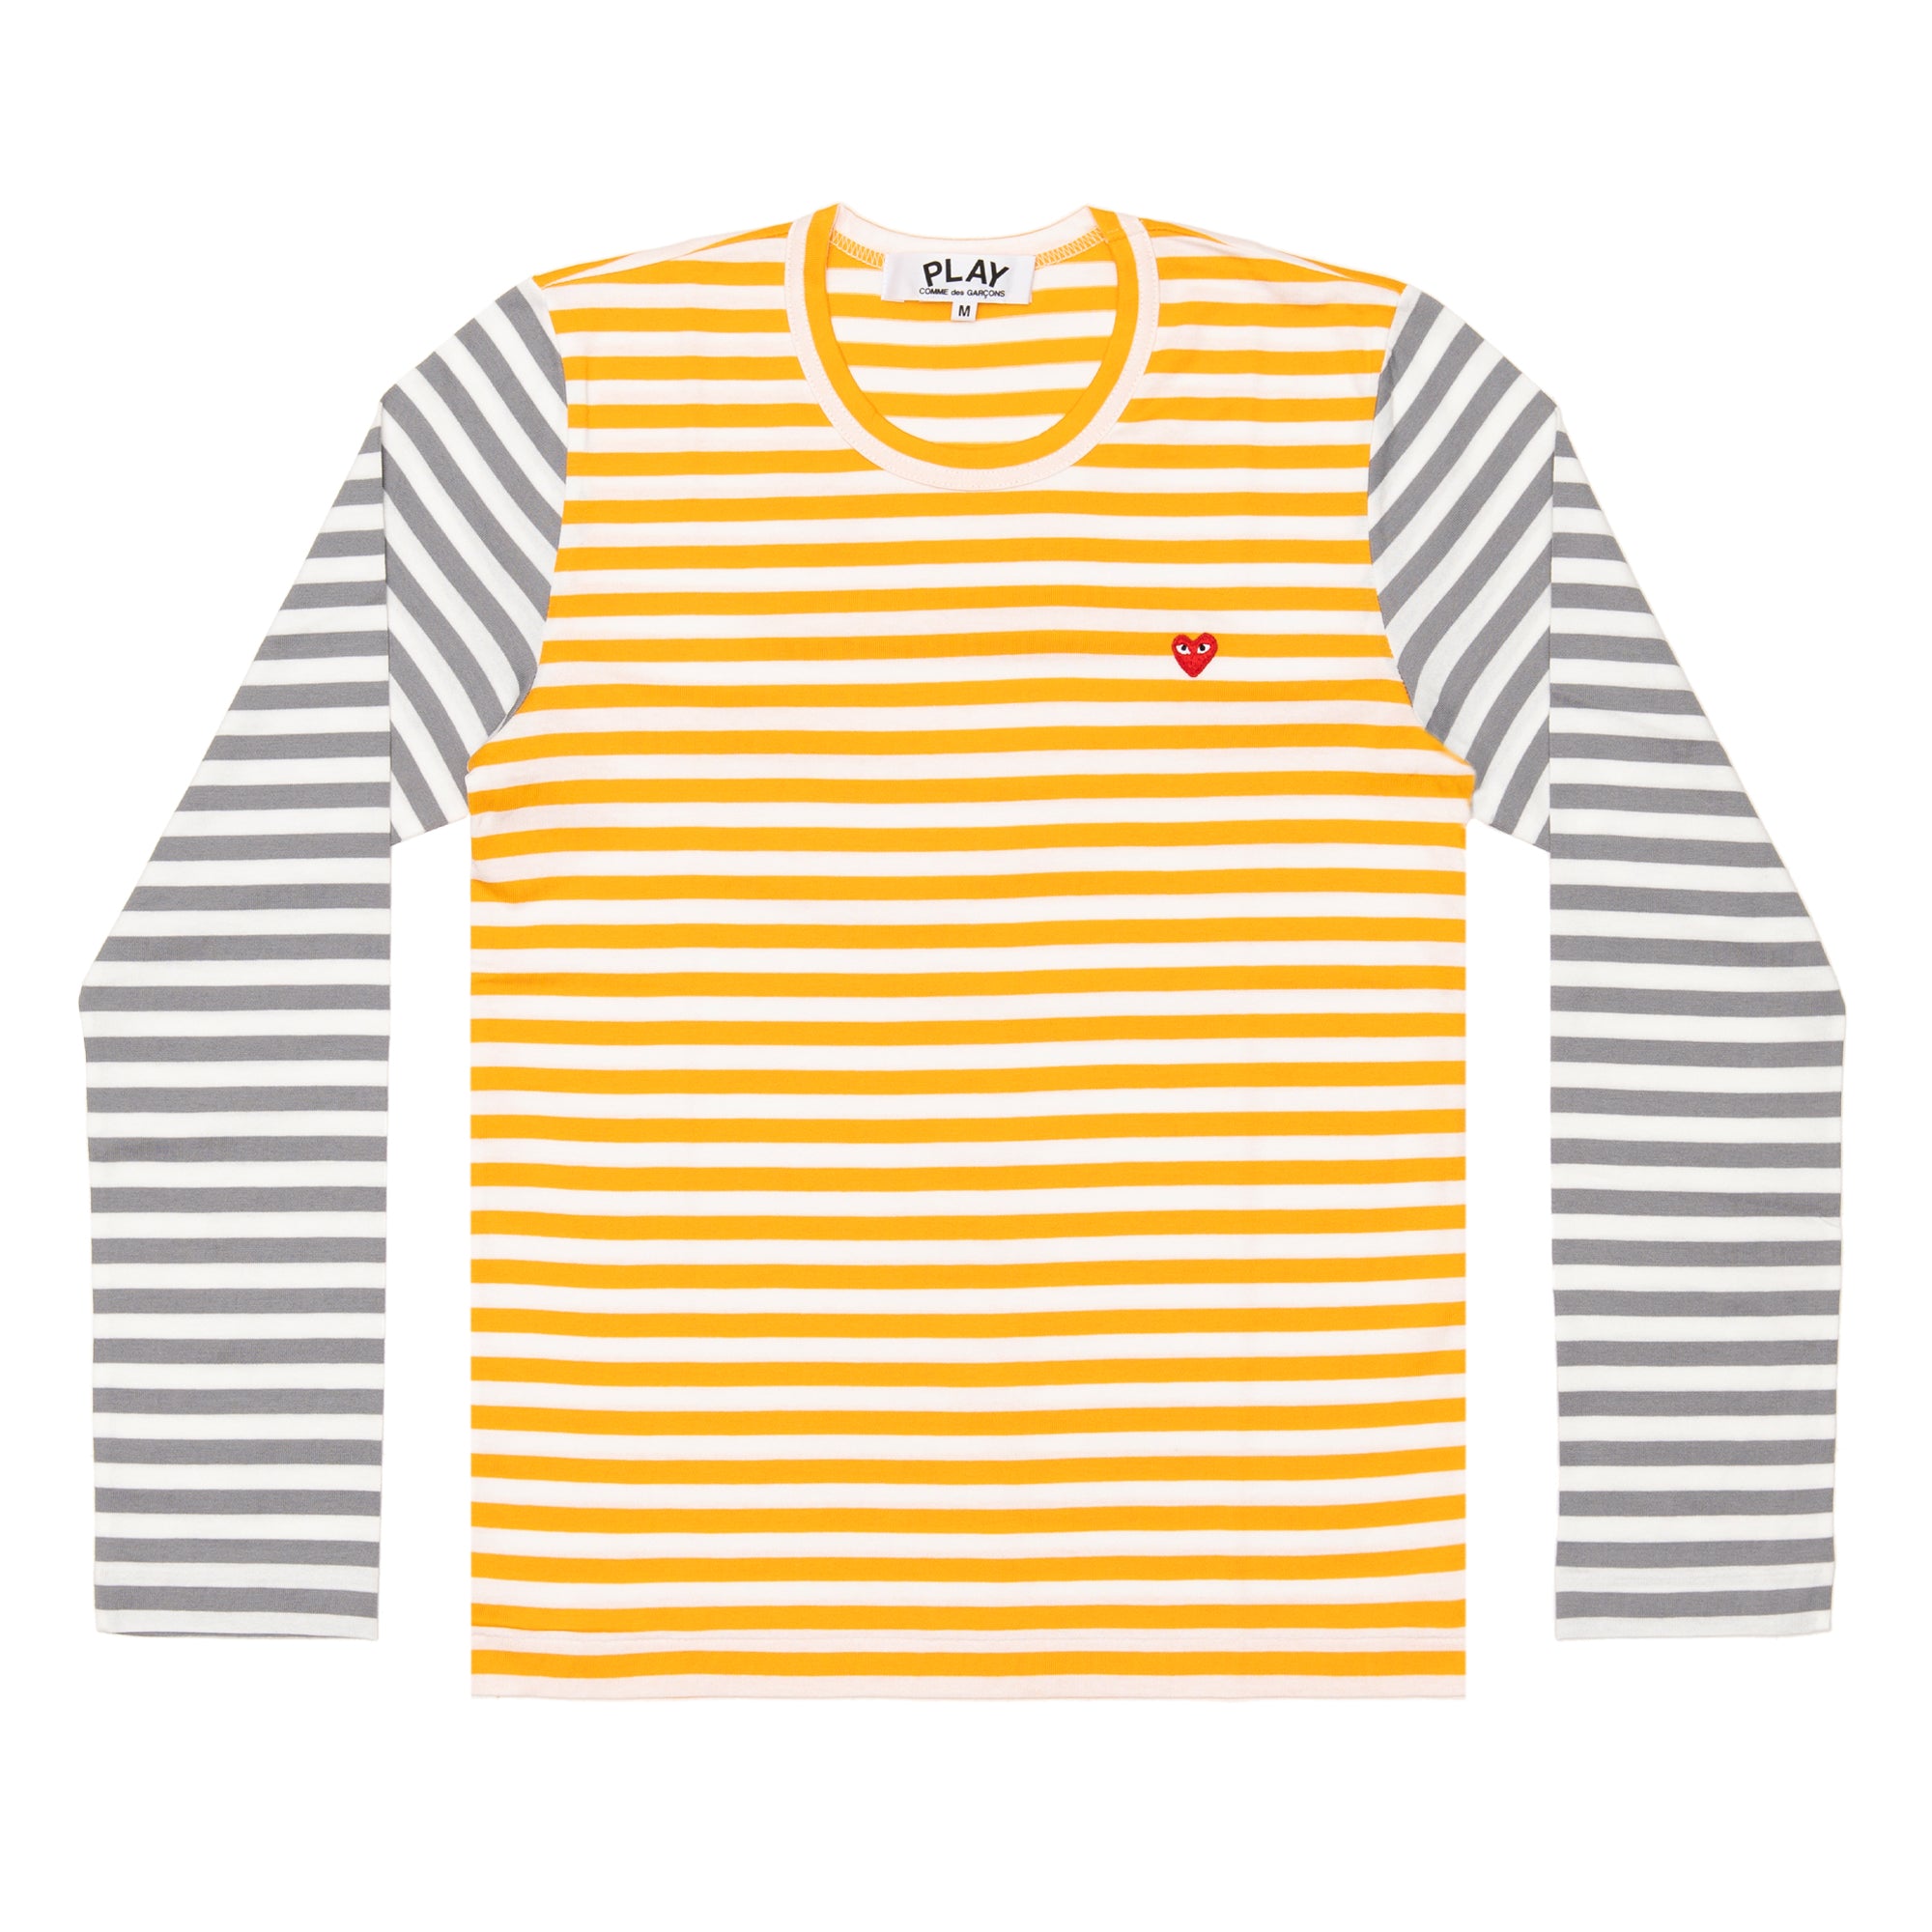 PLAY COMME des GARÇONS Small Red Heart Striped L/S T-Shirt (Yellow X Gray) Ladies: ¥10,010 Men's: ¥10,780